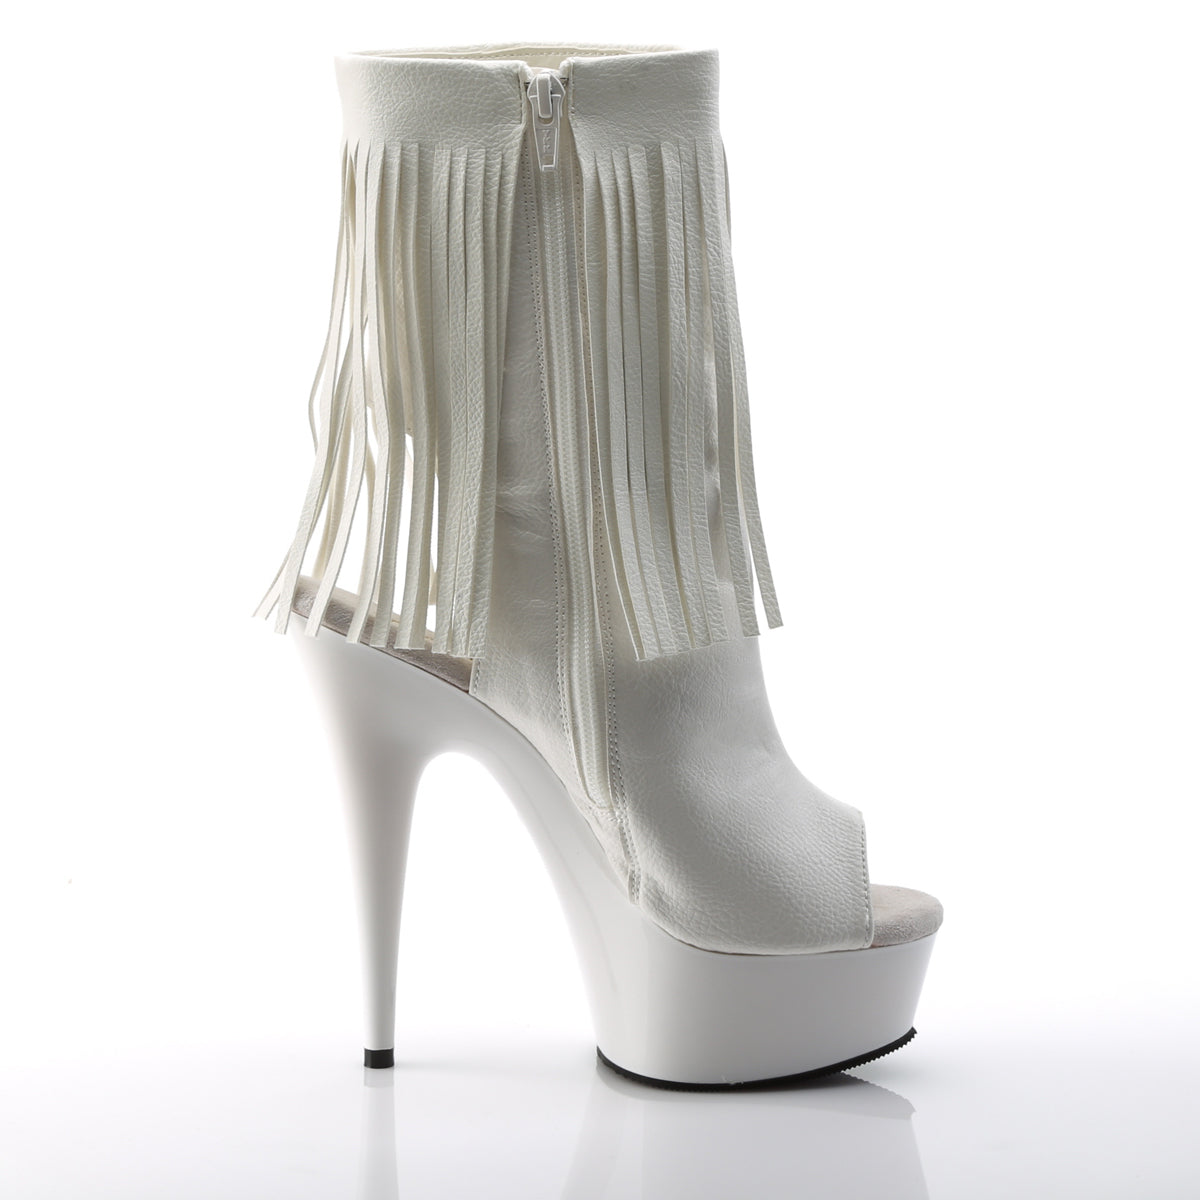 DELIGHT-1019 Pleaser 6 Inch Heel White Pole Dancer Platforms-Pleaser- Sexy Shoes Fetish Heels